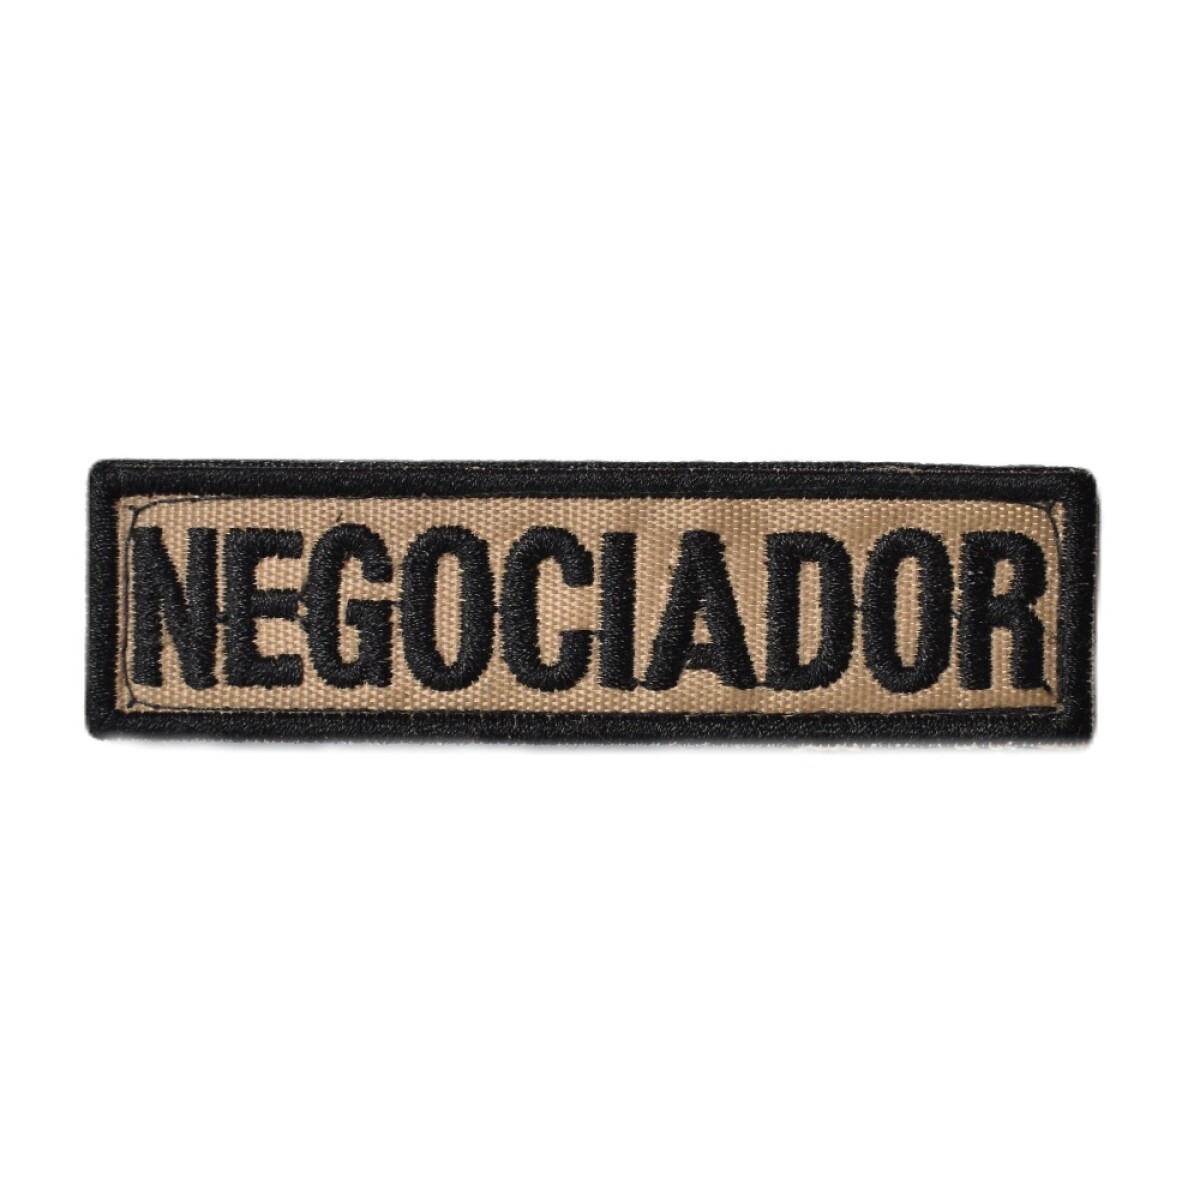 Parche rectangular bordado - NEGOCIADOR - Caqui 